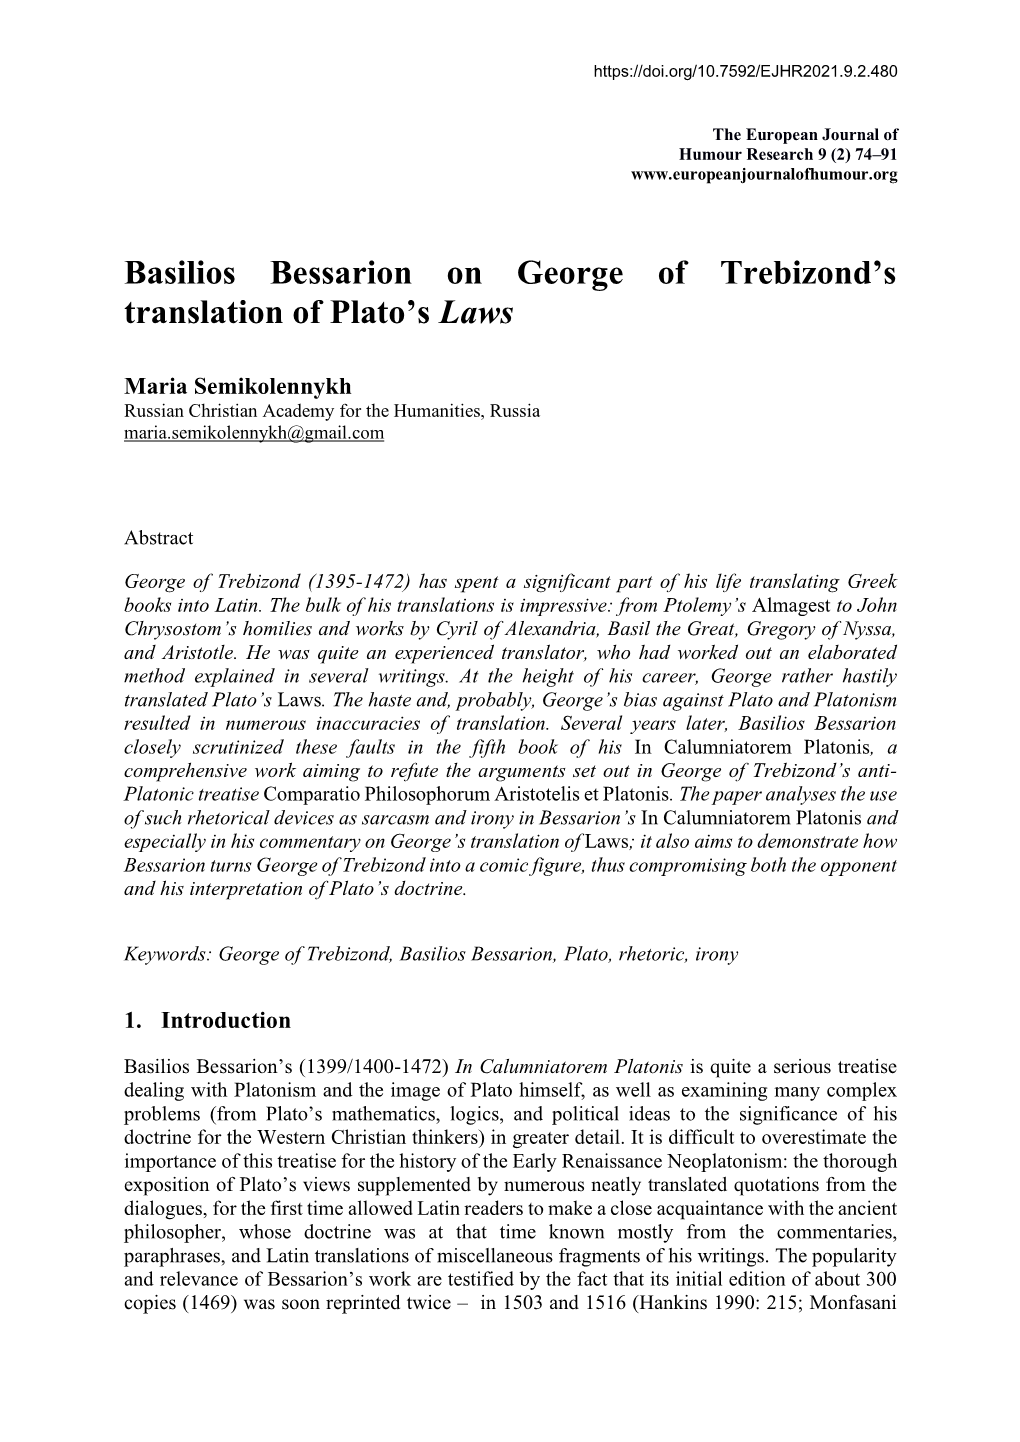 Basilios Bessarion on George of Trebizond's Translation of Plato's Laws